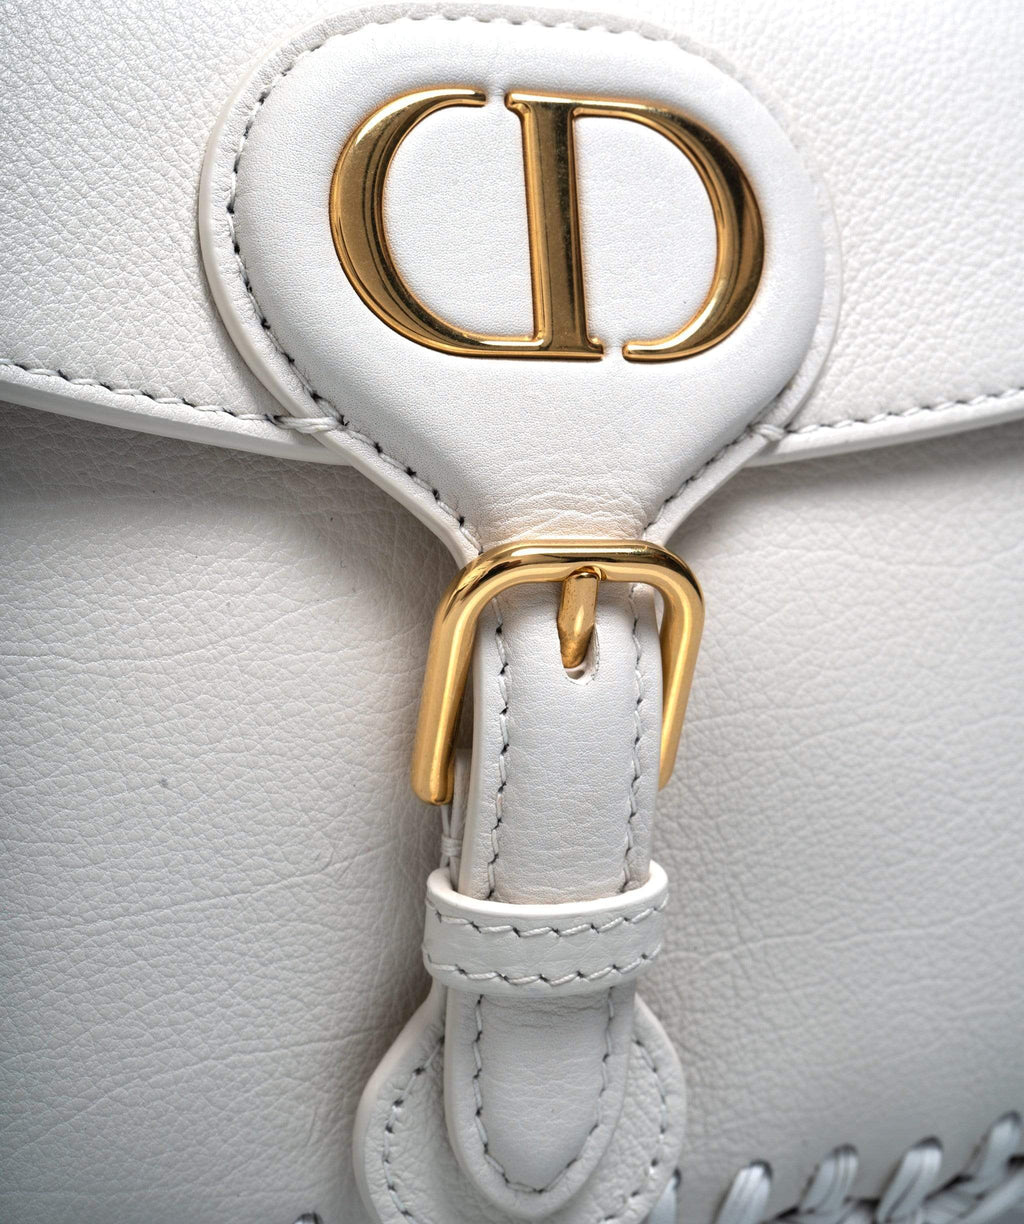 MANIFESTO - YOUR WARDROBE'S NEW BEST FRIEND: Dior's Bobby Bags